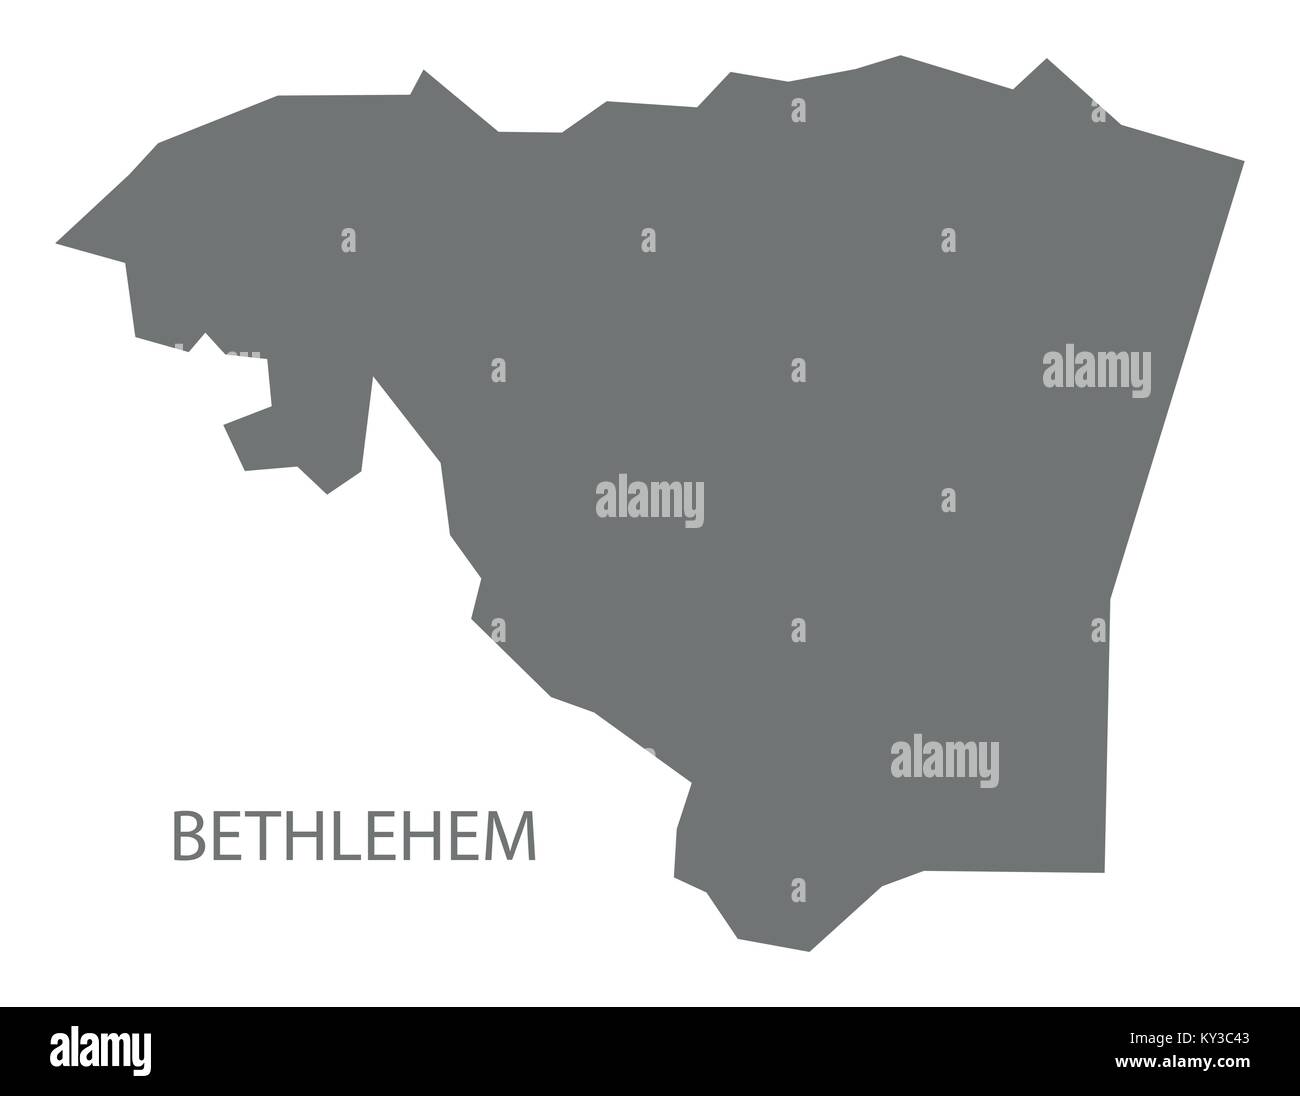 Bethlehem Karte von Palästina Grau Abbildung silhouette Form Stock Vektor